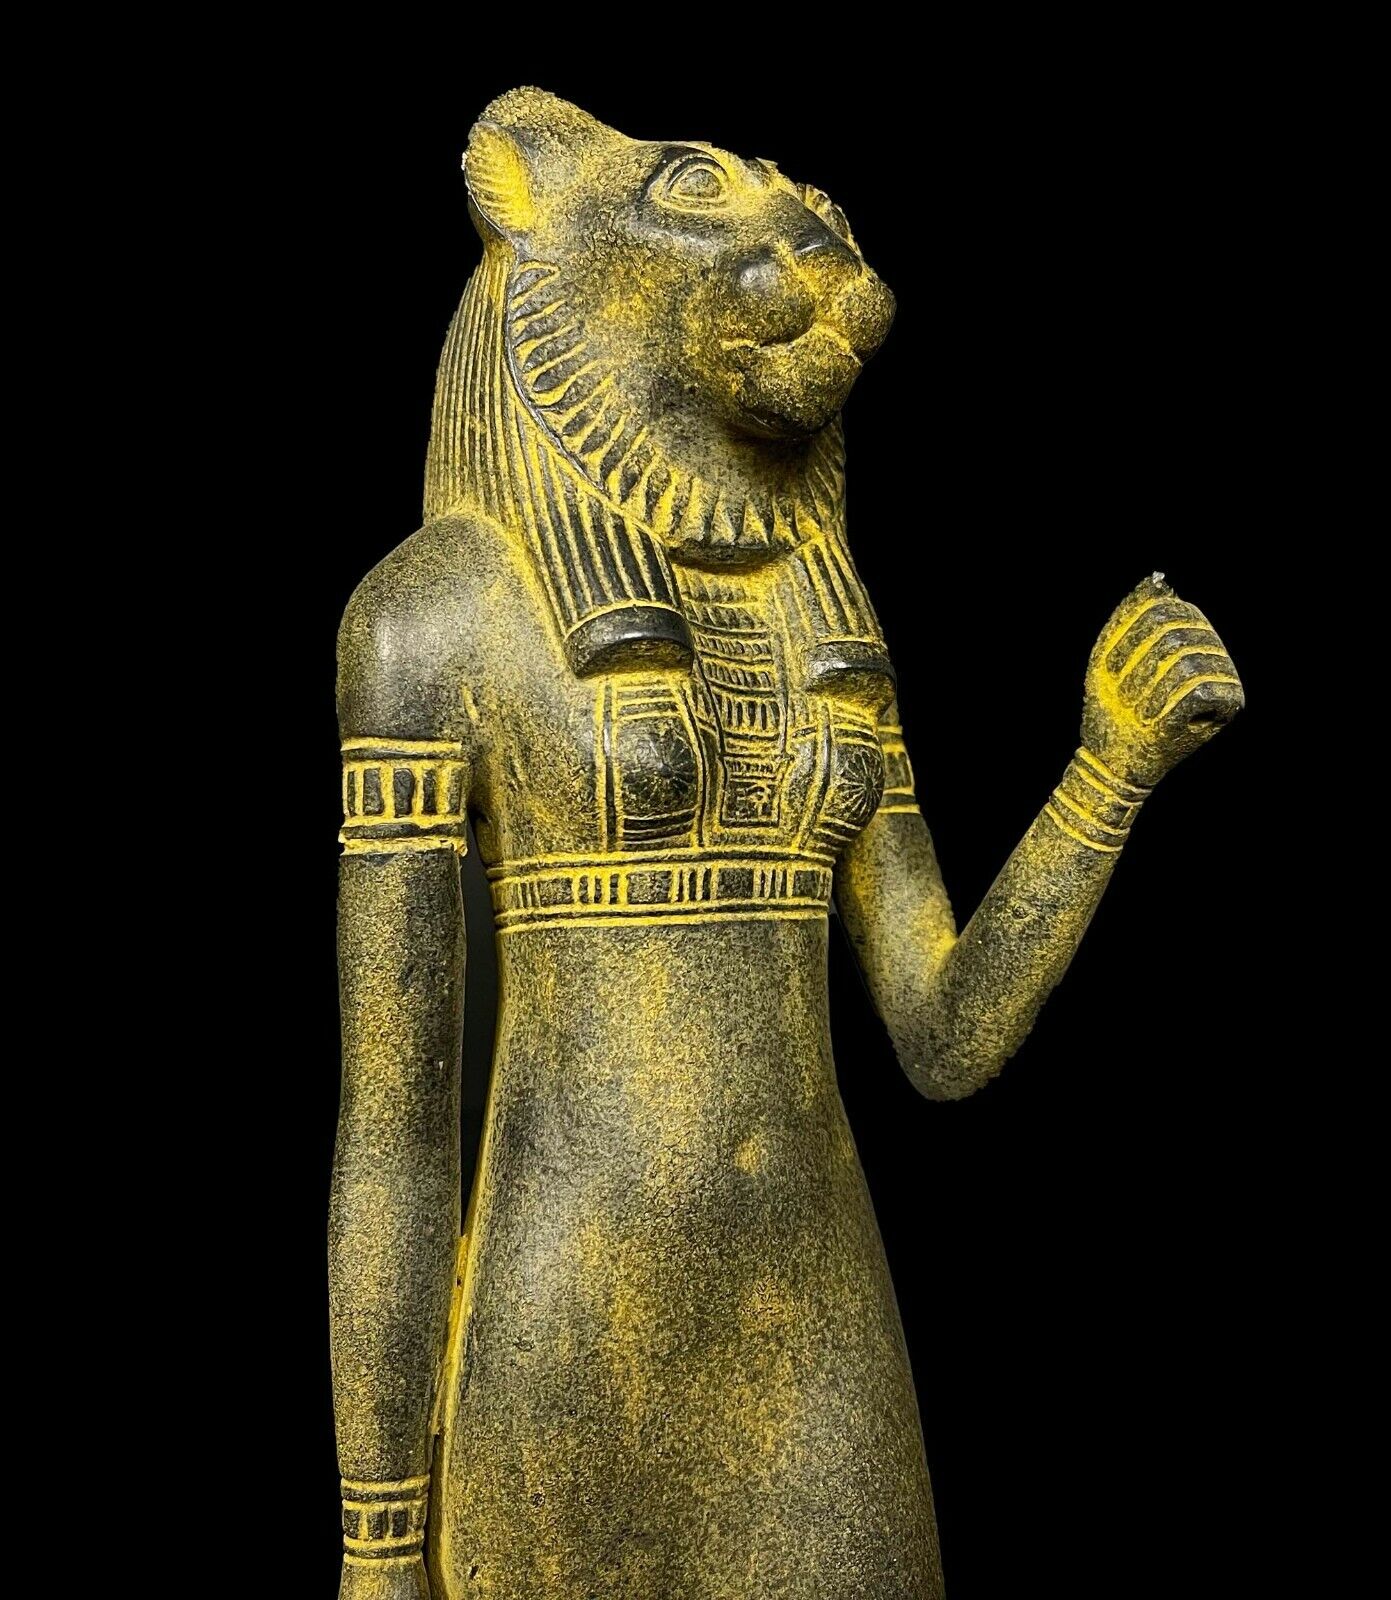 Large Old-fashioned Egyptian Sekhmet Goddess of war and destruction